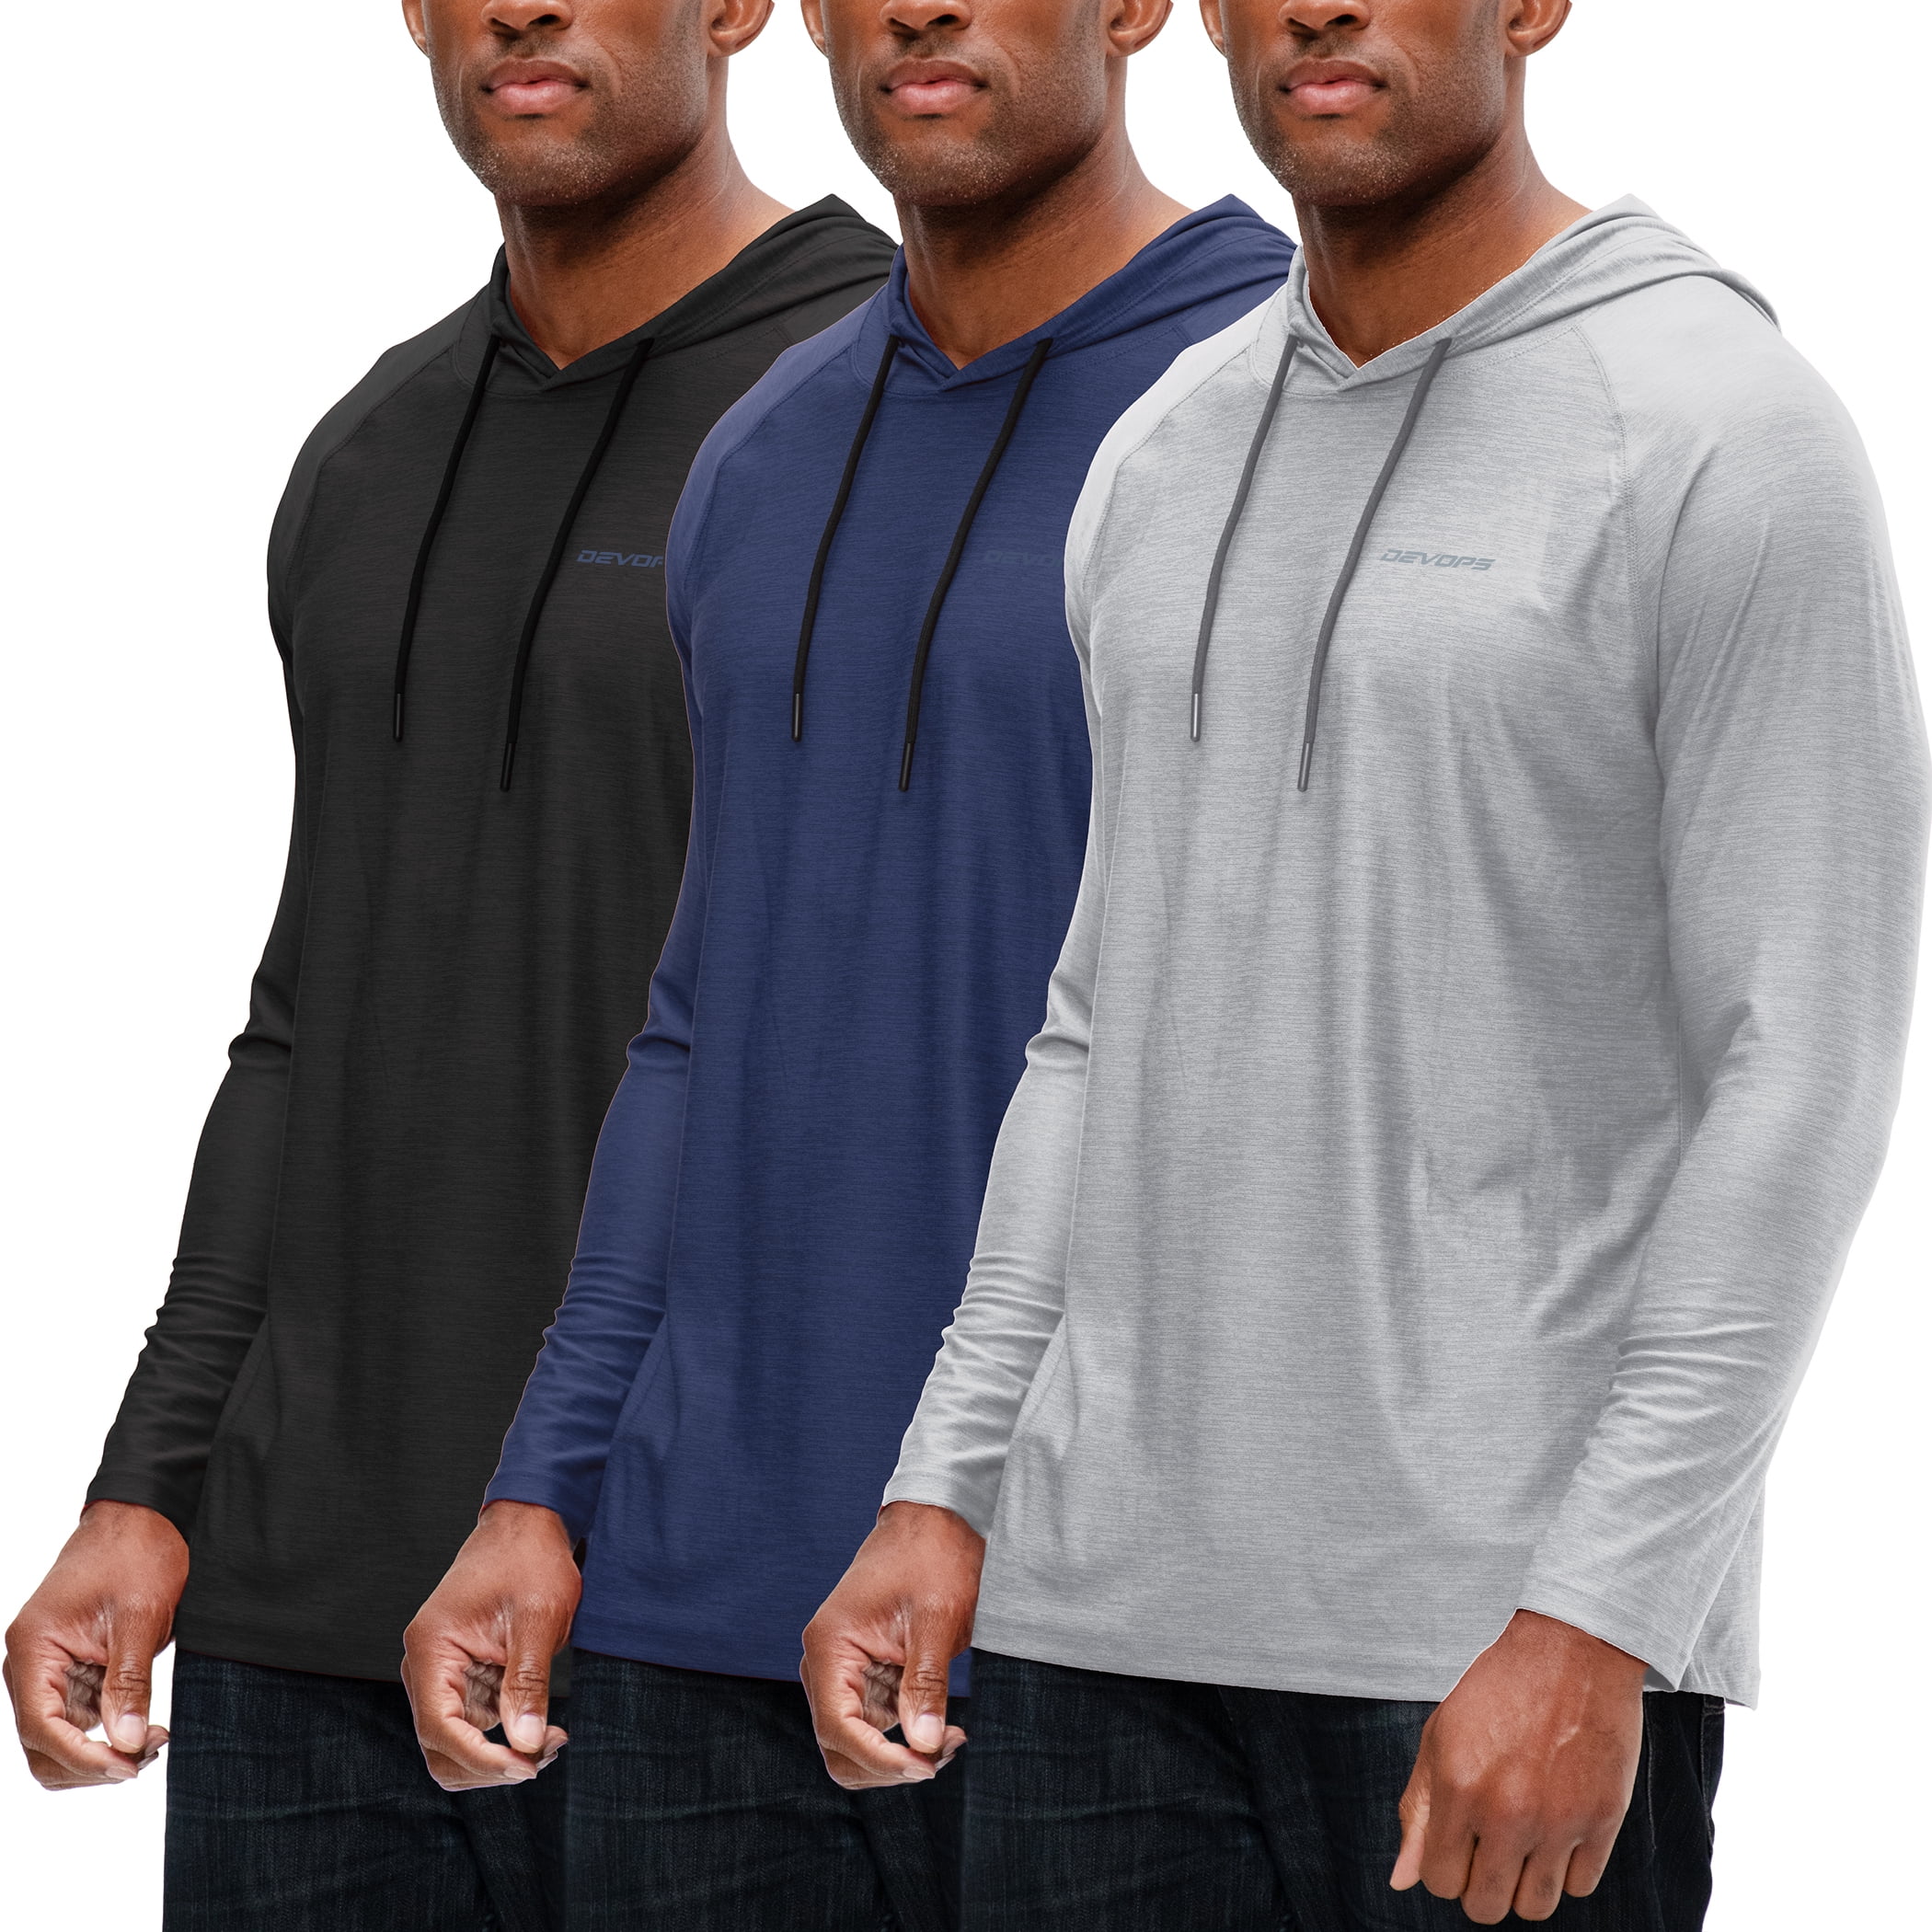 DEVOPS 3 Pack Men's Hoodie Long Sleeve Fishing Hiking Running Workout  T-shirts (Medium, Black/Navy/Gray)